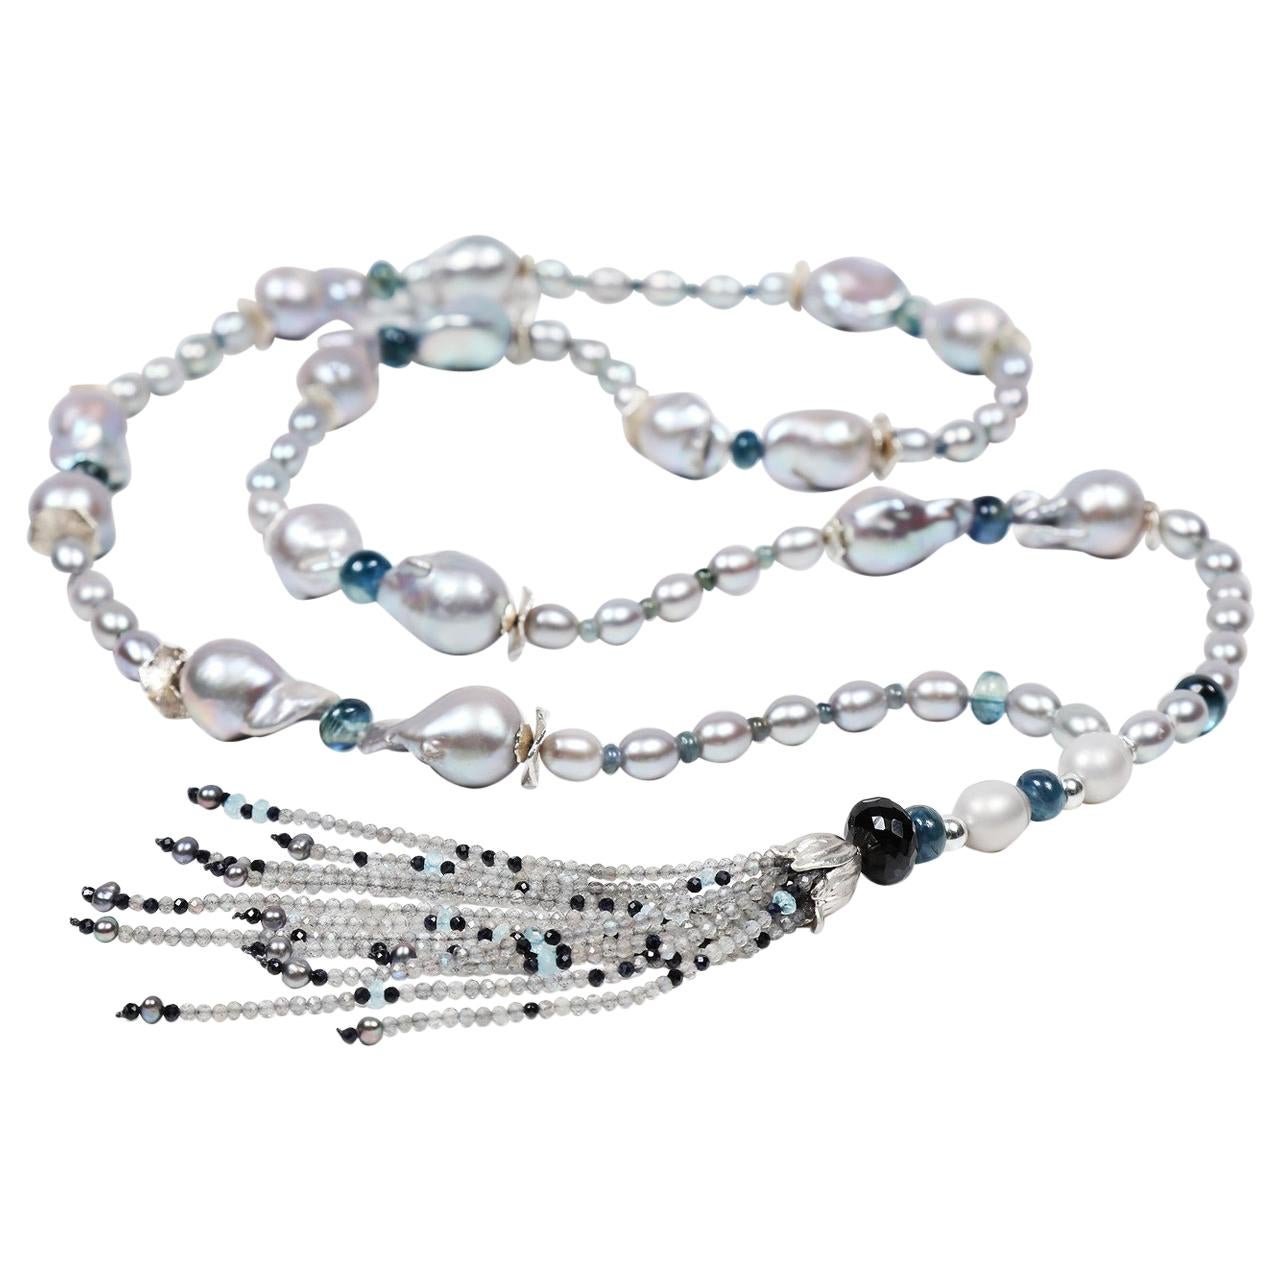 Sautoir: Pearls, Kyanite, Sapphire, Topaz, and Silver 